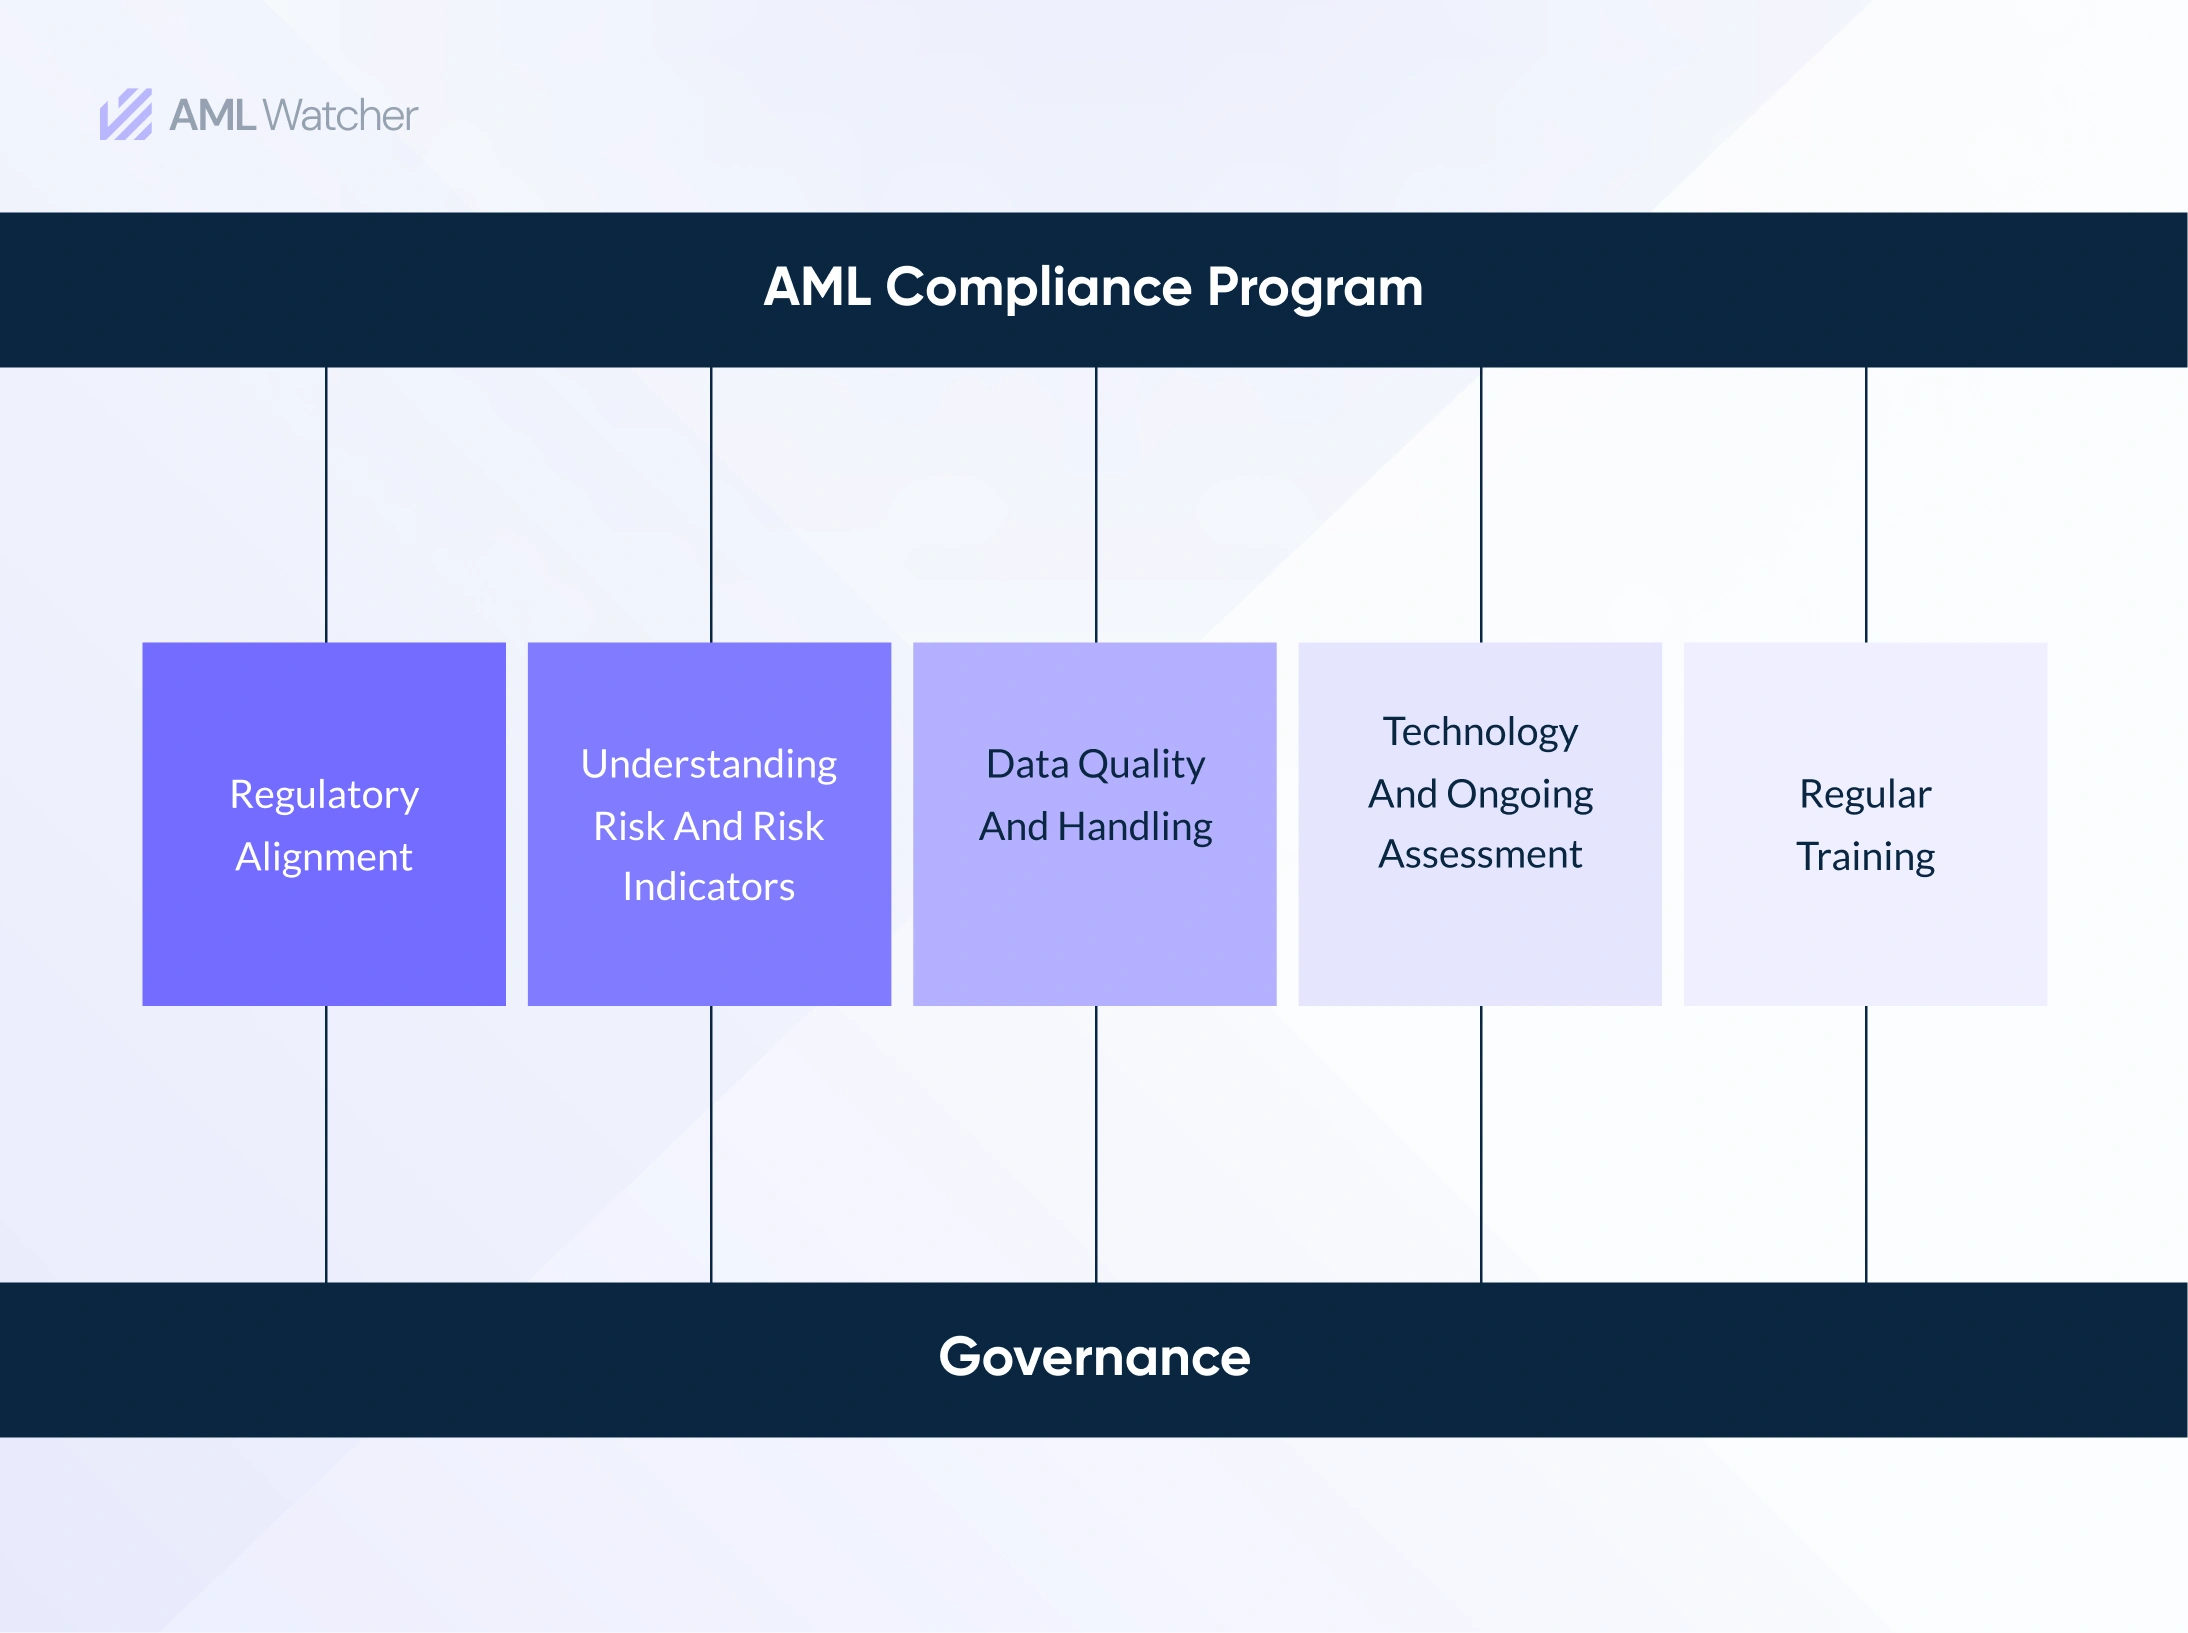 This image shows the AML compliance program under international regulations